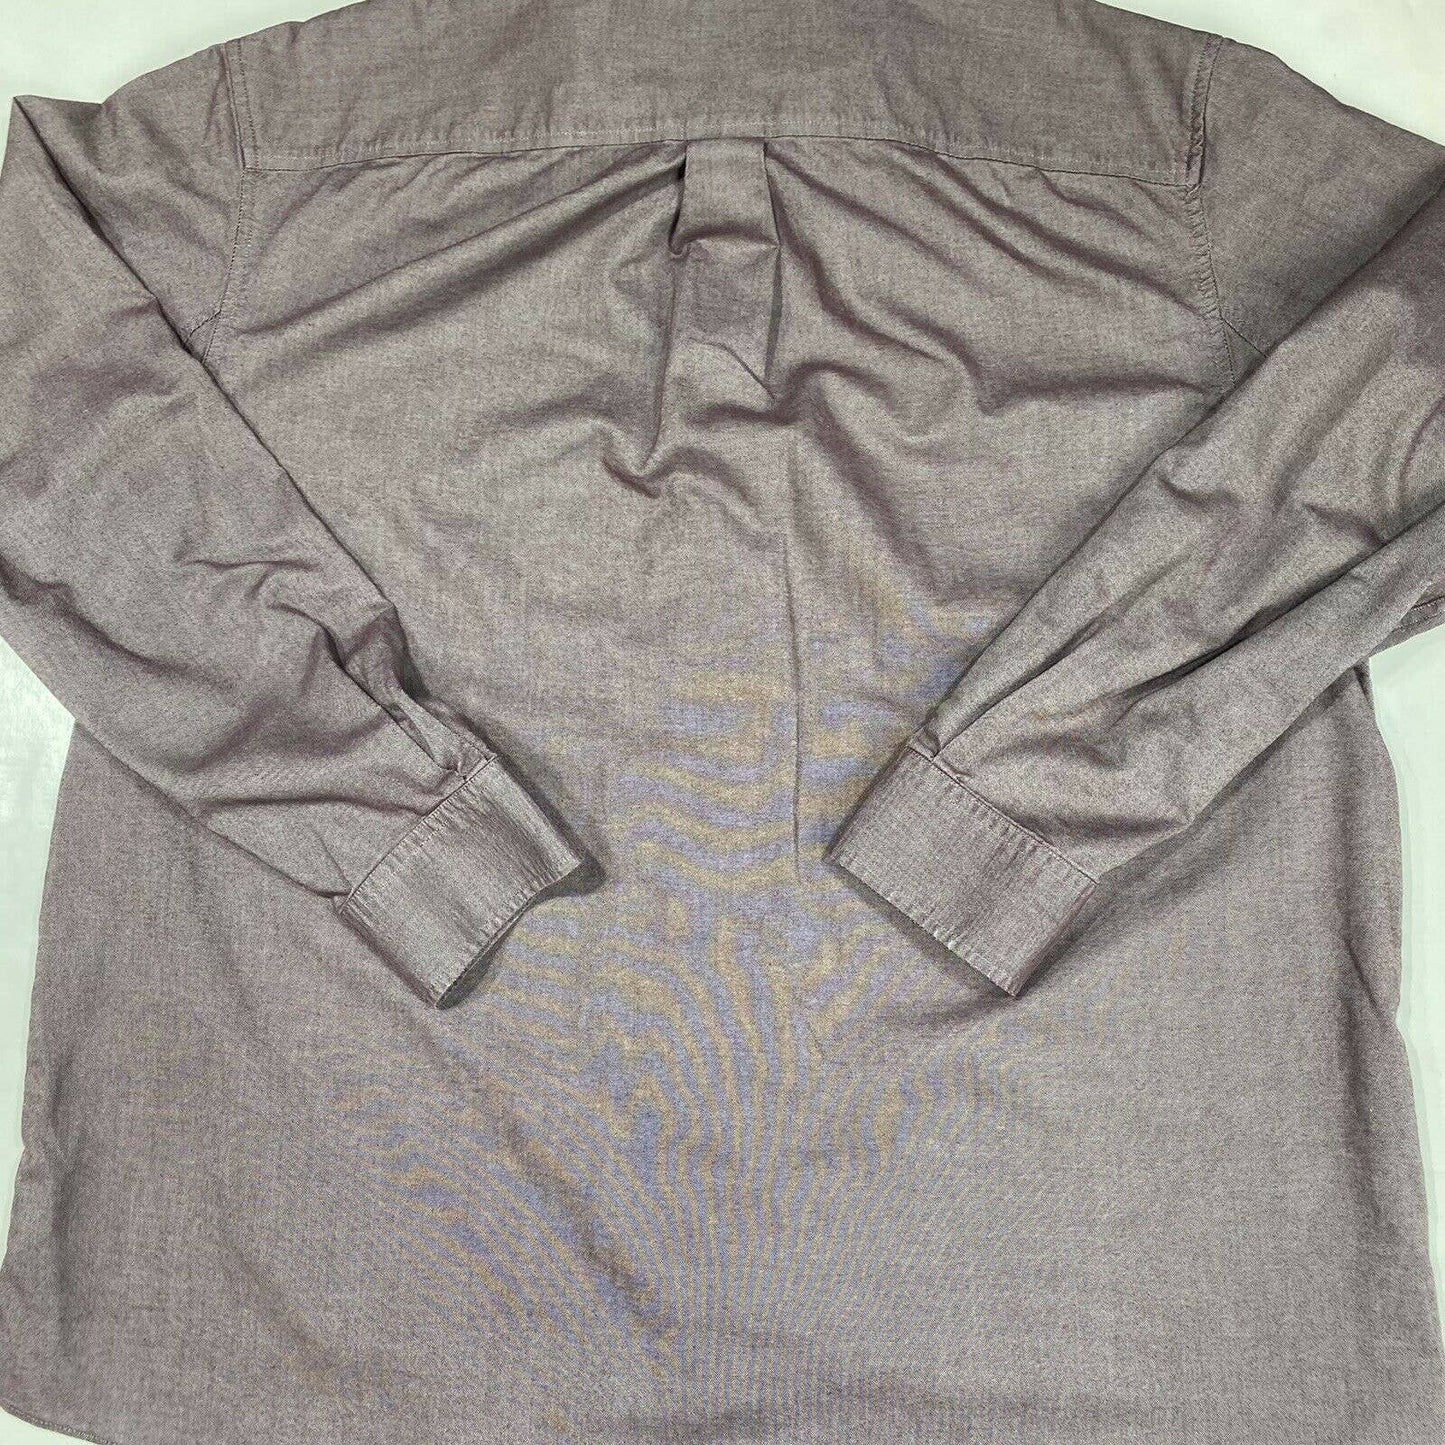 Duluth Trading Button Up Shirt Sz Large Mens Long Sleeve Casual Dress Burgundy